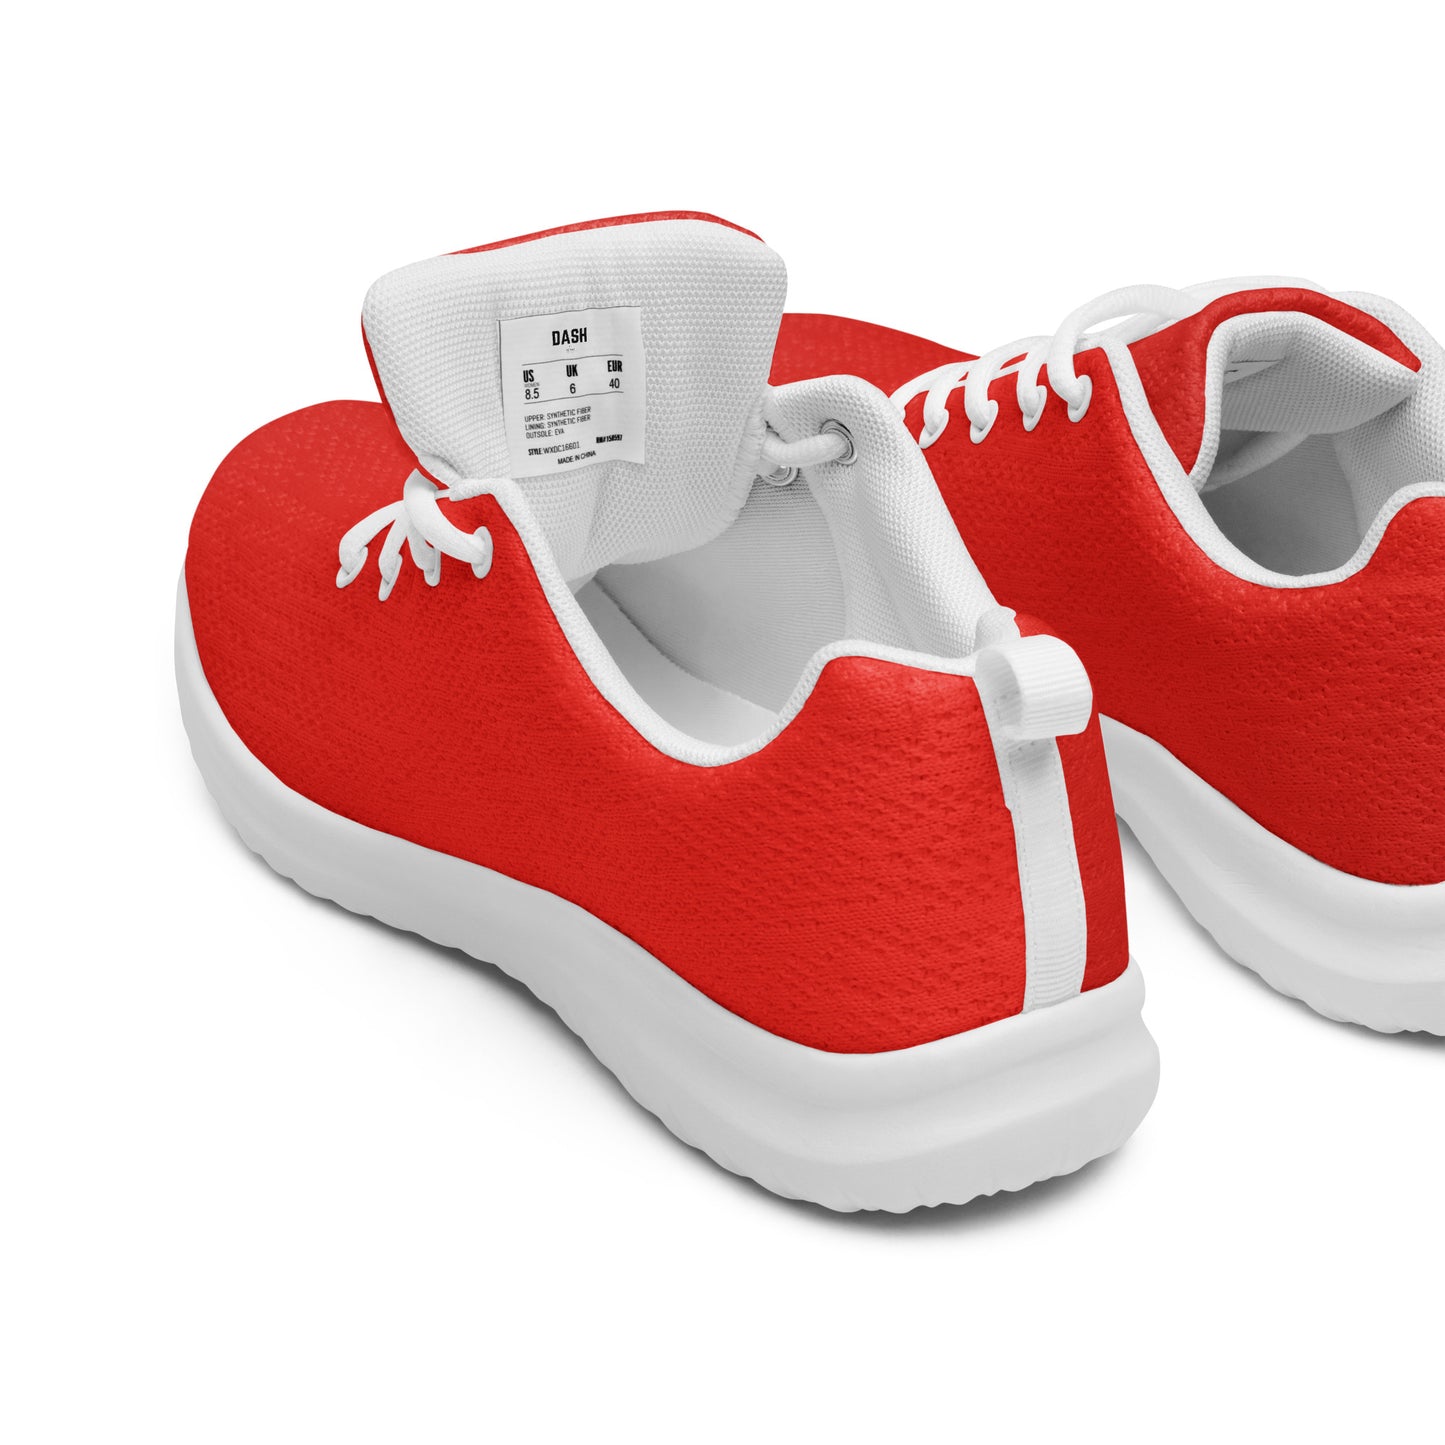 DASH Hot Lava Women’s Athletic Shoes Lightweight Breathable Design by IOBI Original Apparel